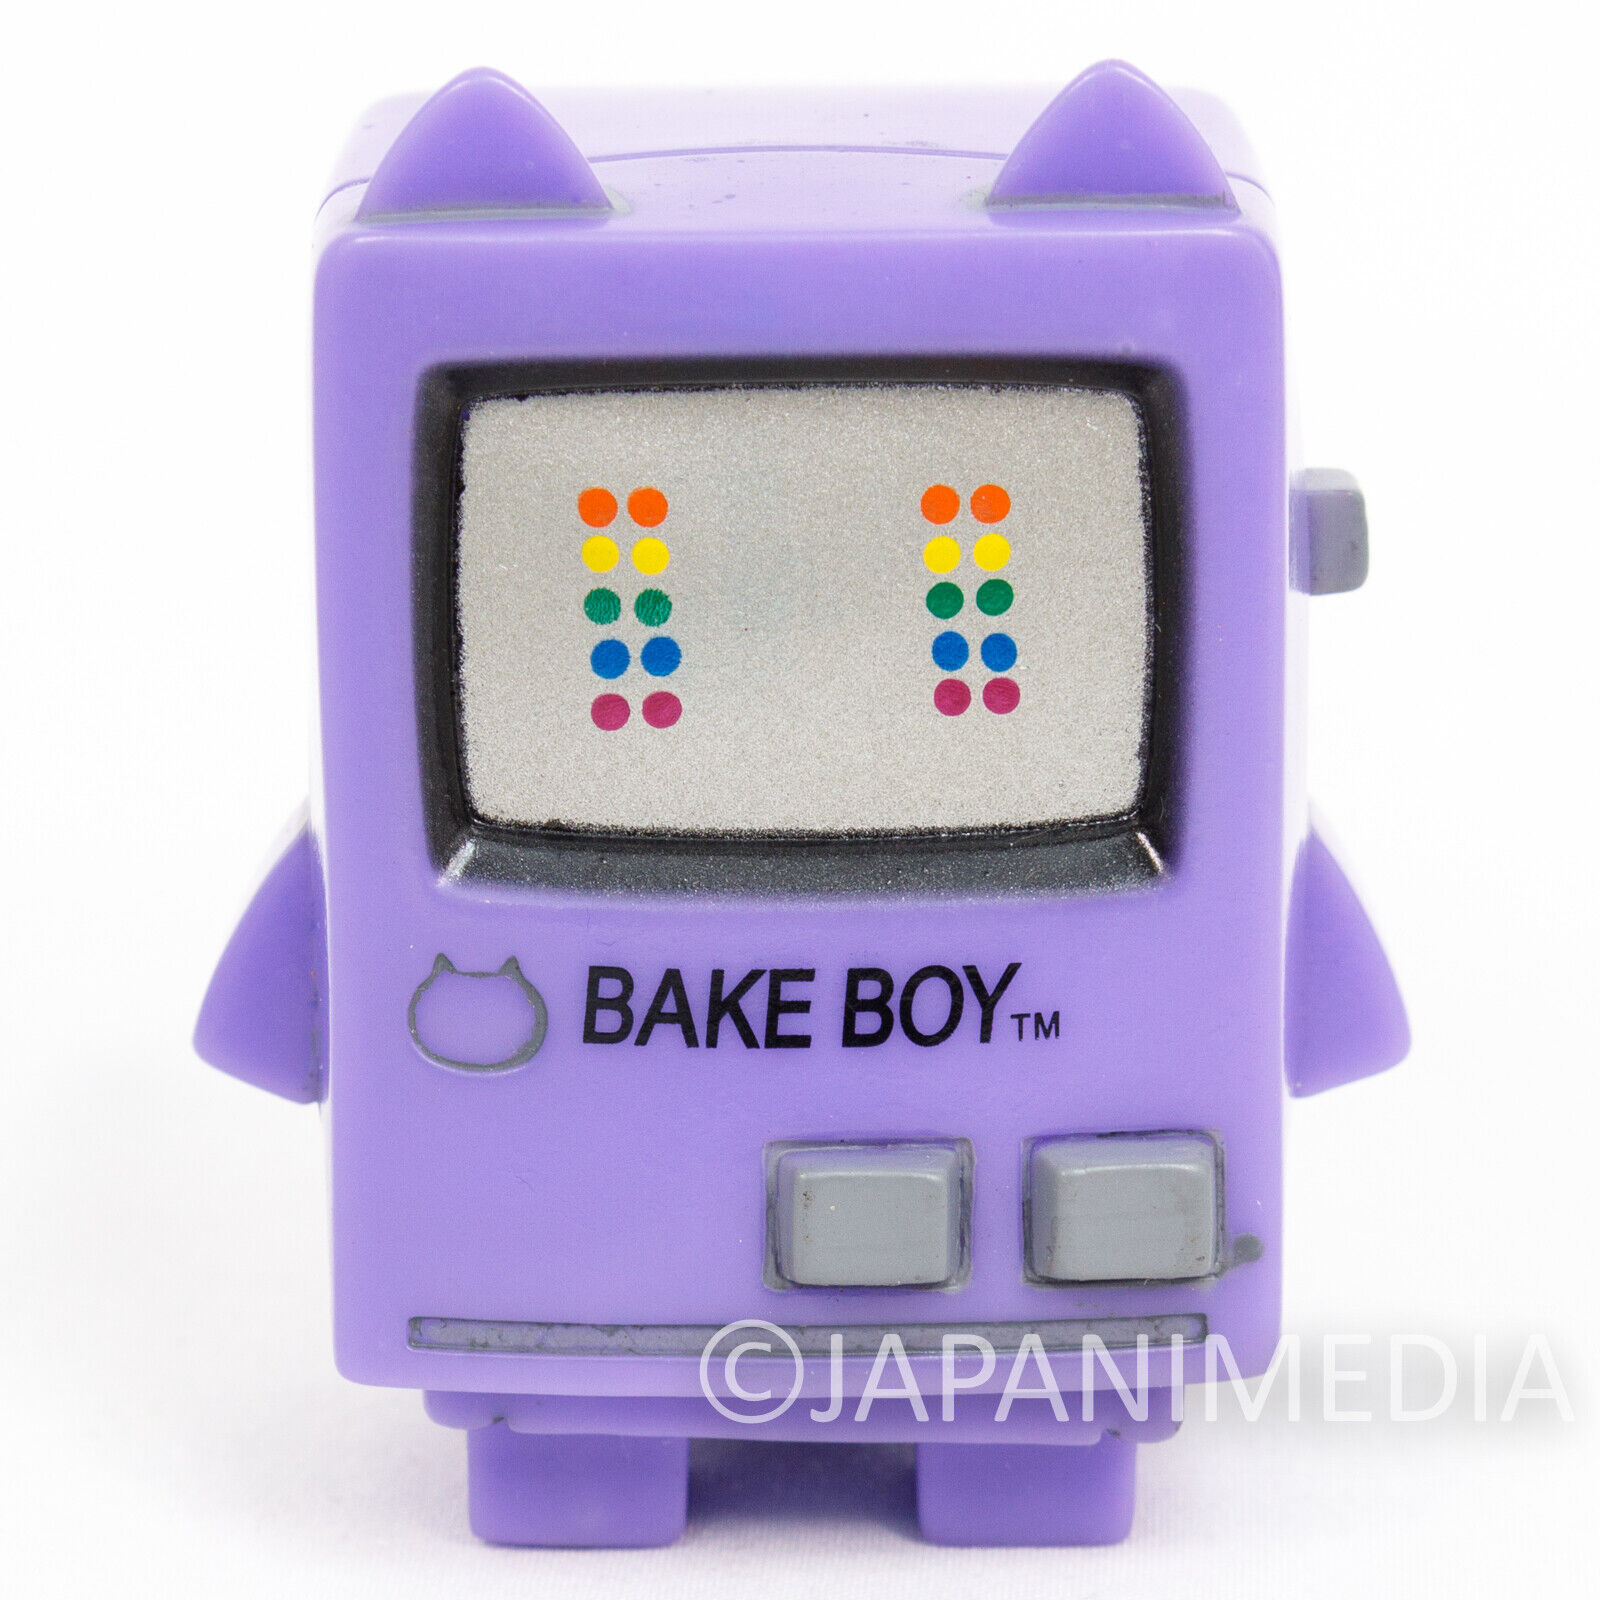 BAKETAN Bake Boy Purple ver. Soft Vinyl Figure Medicom Toy VAG Series JAPAN